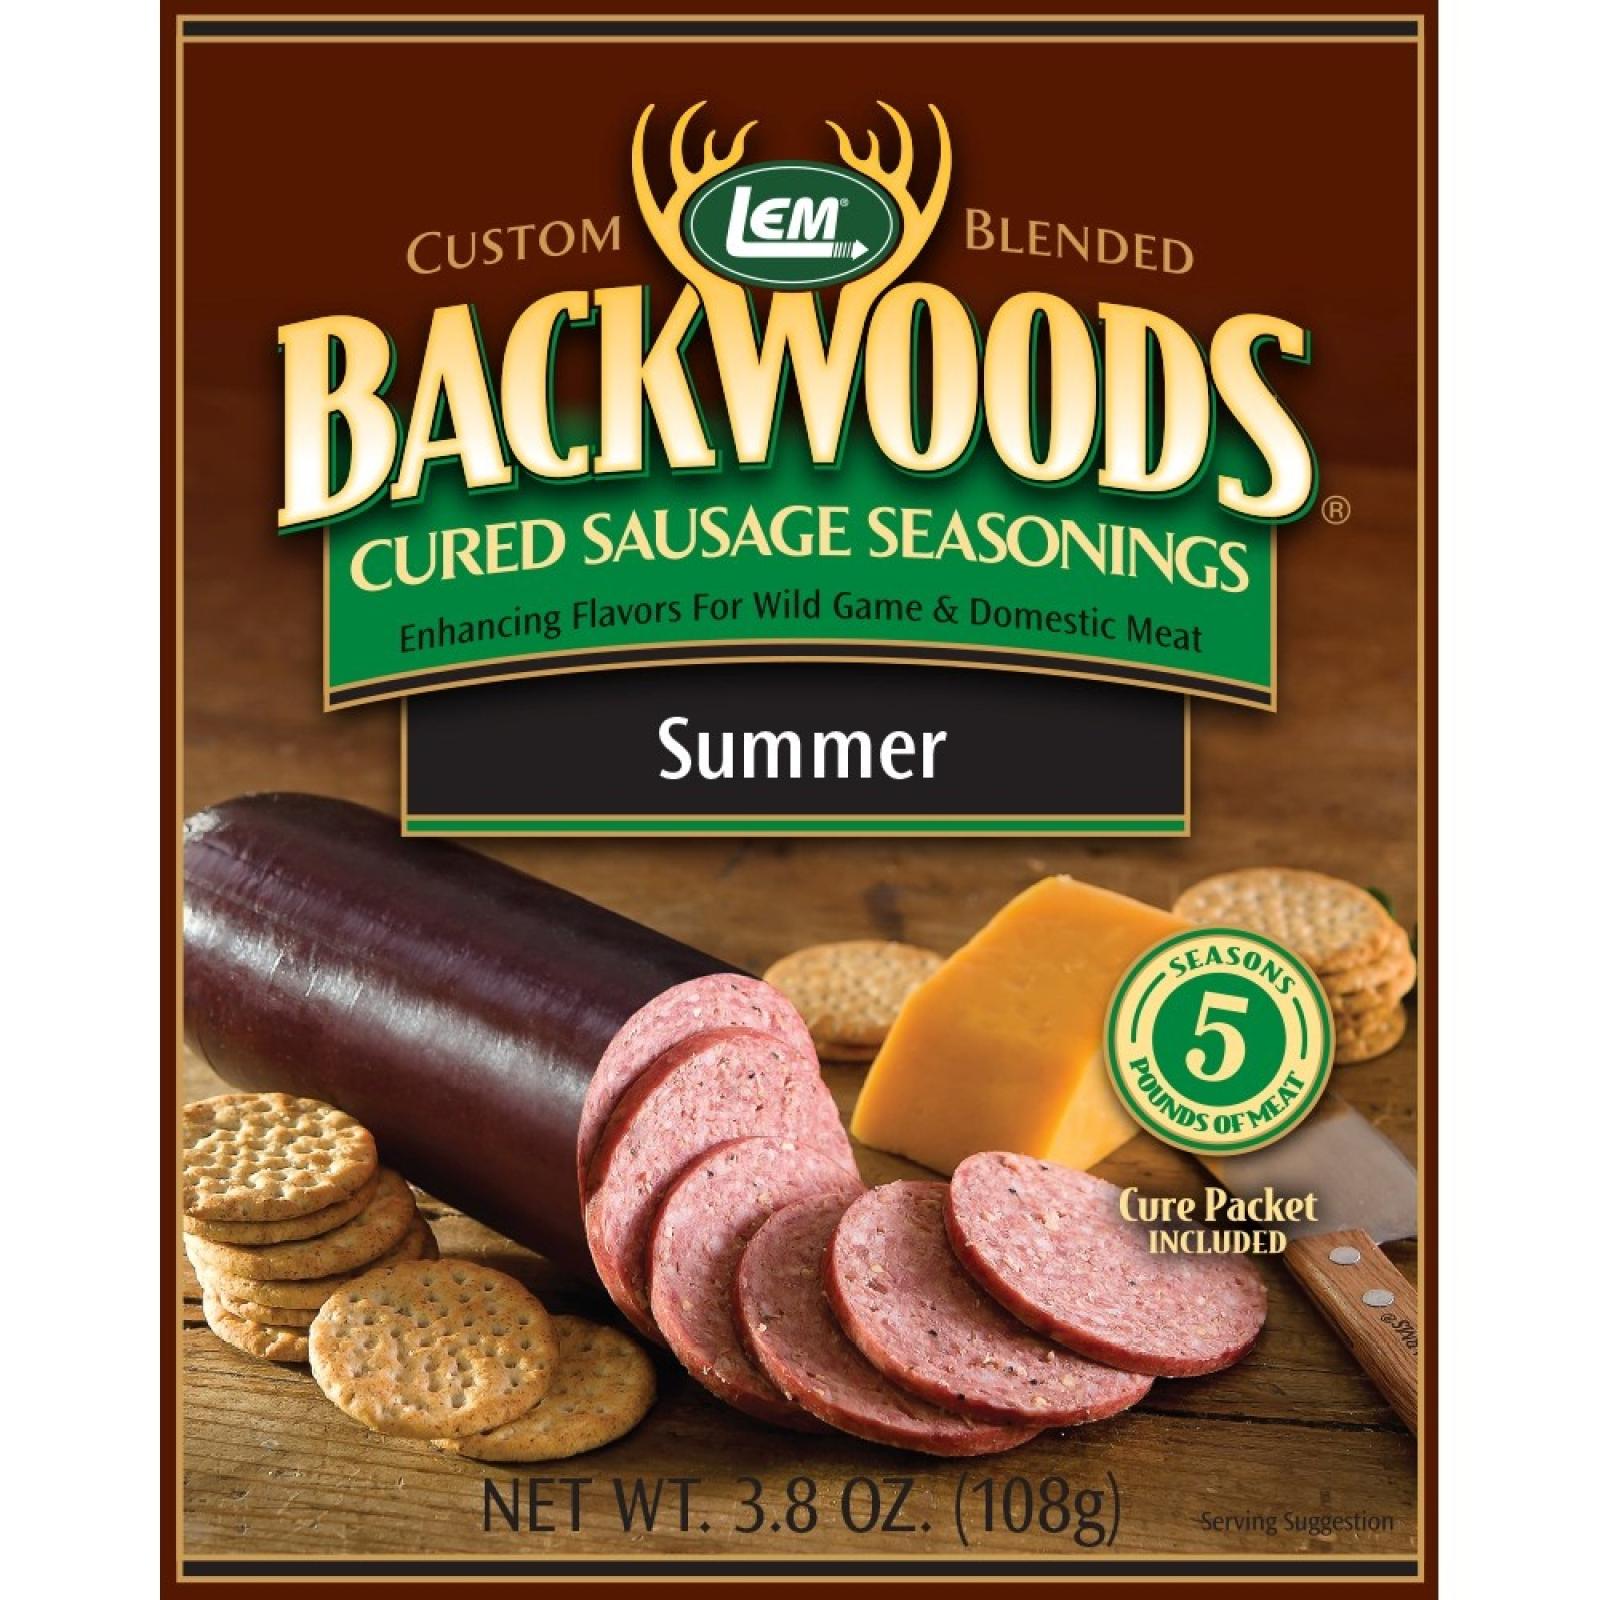 LEM Backwoods Summer Cured Sausage Seasonings 5lbs